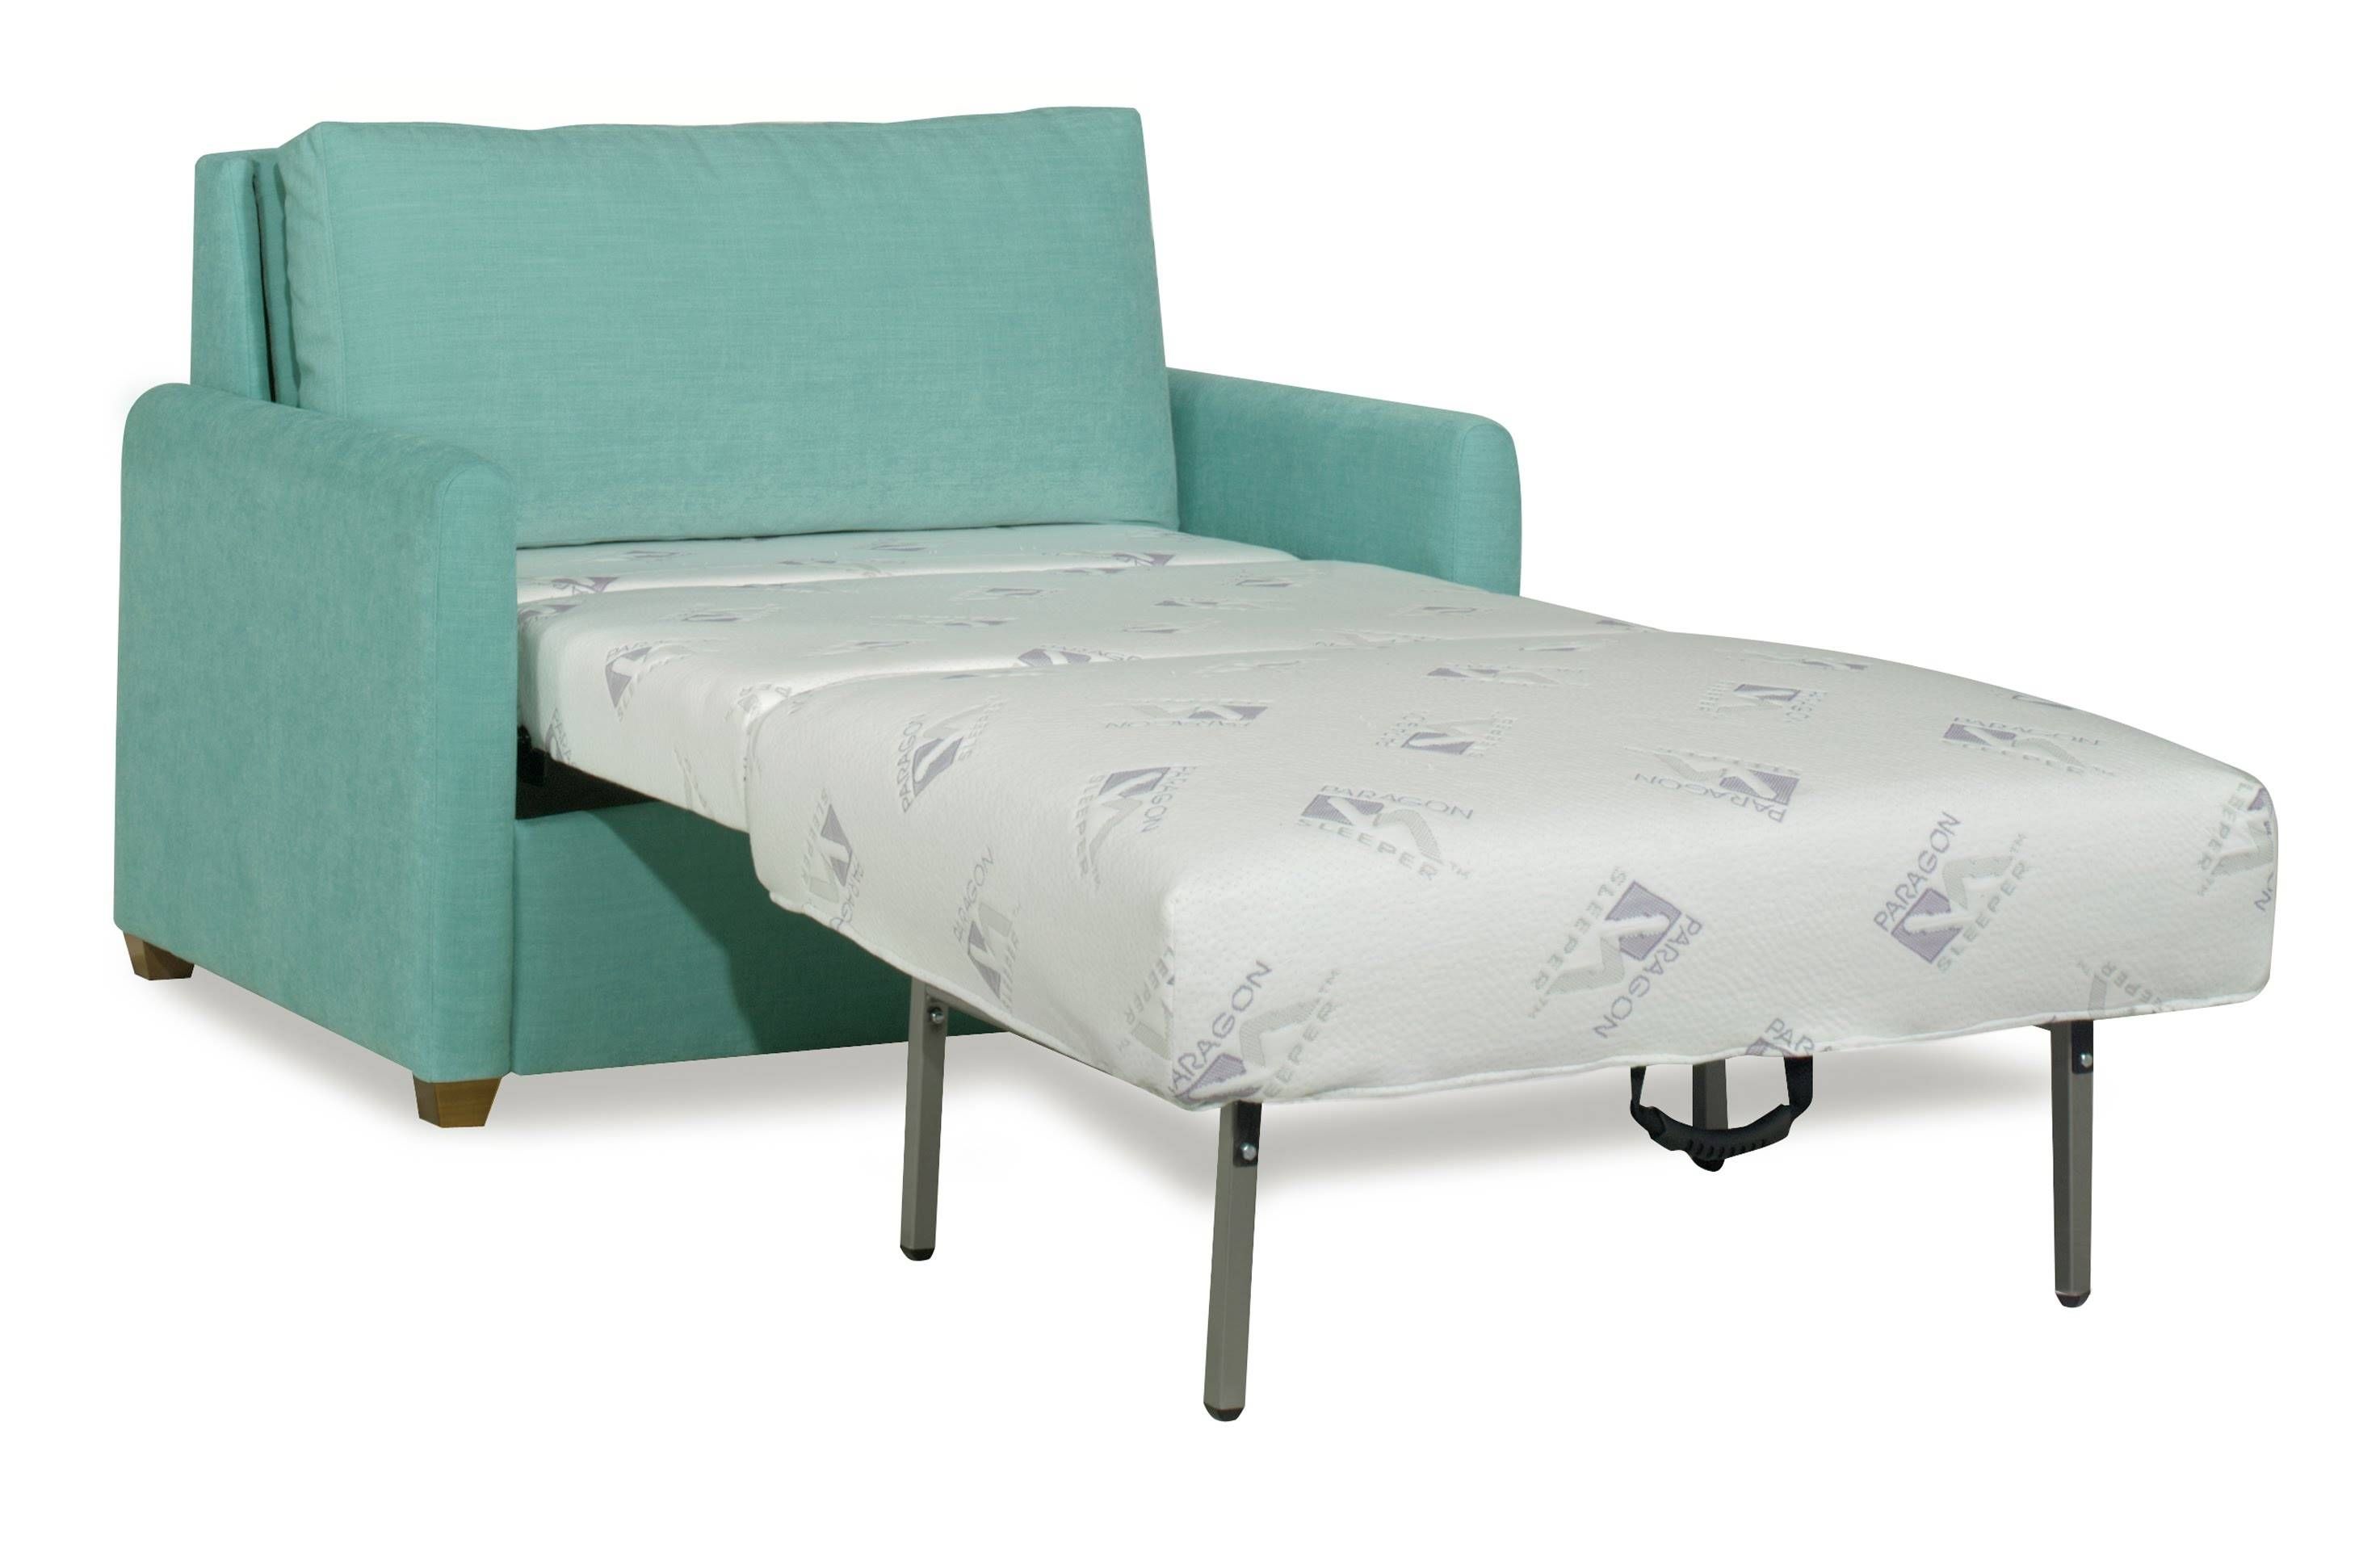 Chair Sleeper Sofas Chair Beds Ikea Single Sofa 0325767 Pe5230 With Regard To Ikea Loveseat Sleeper Sofas 